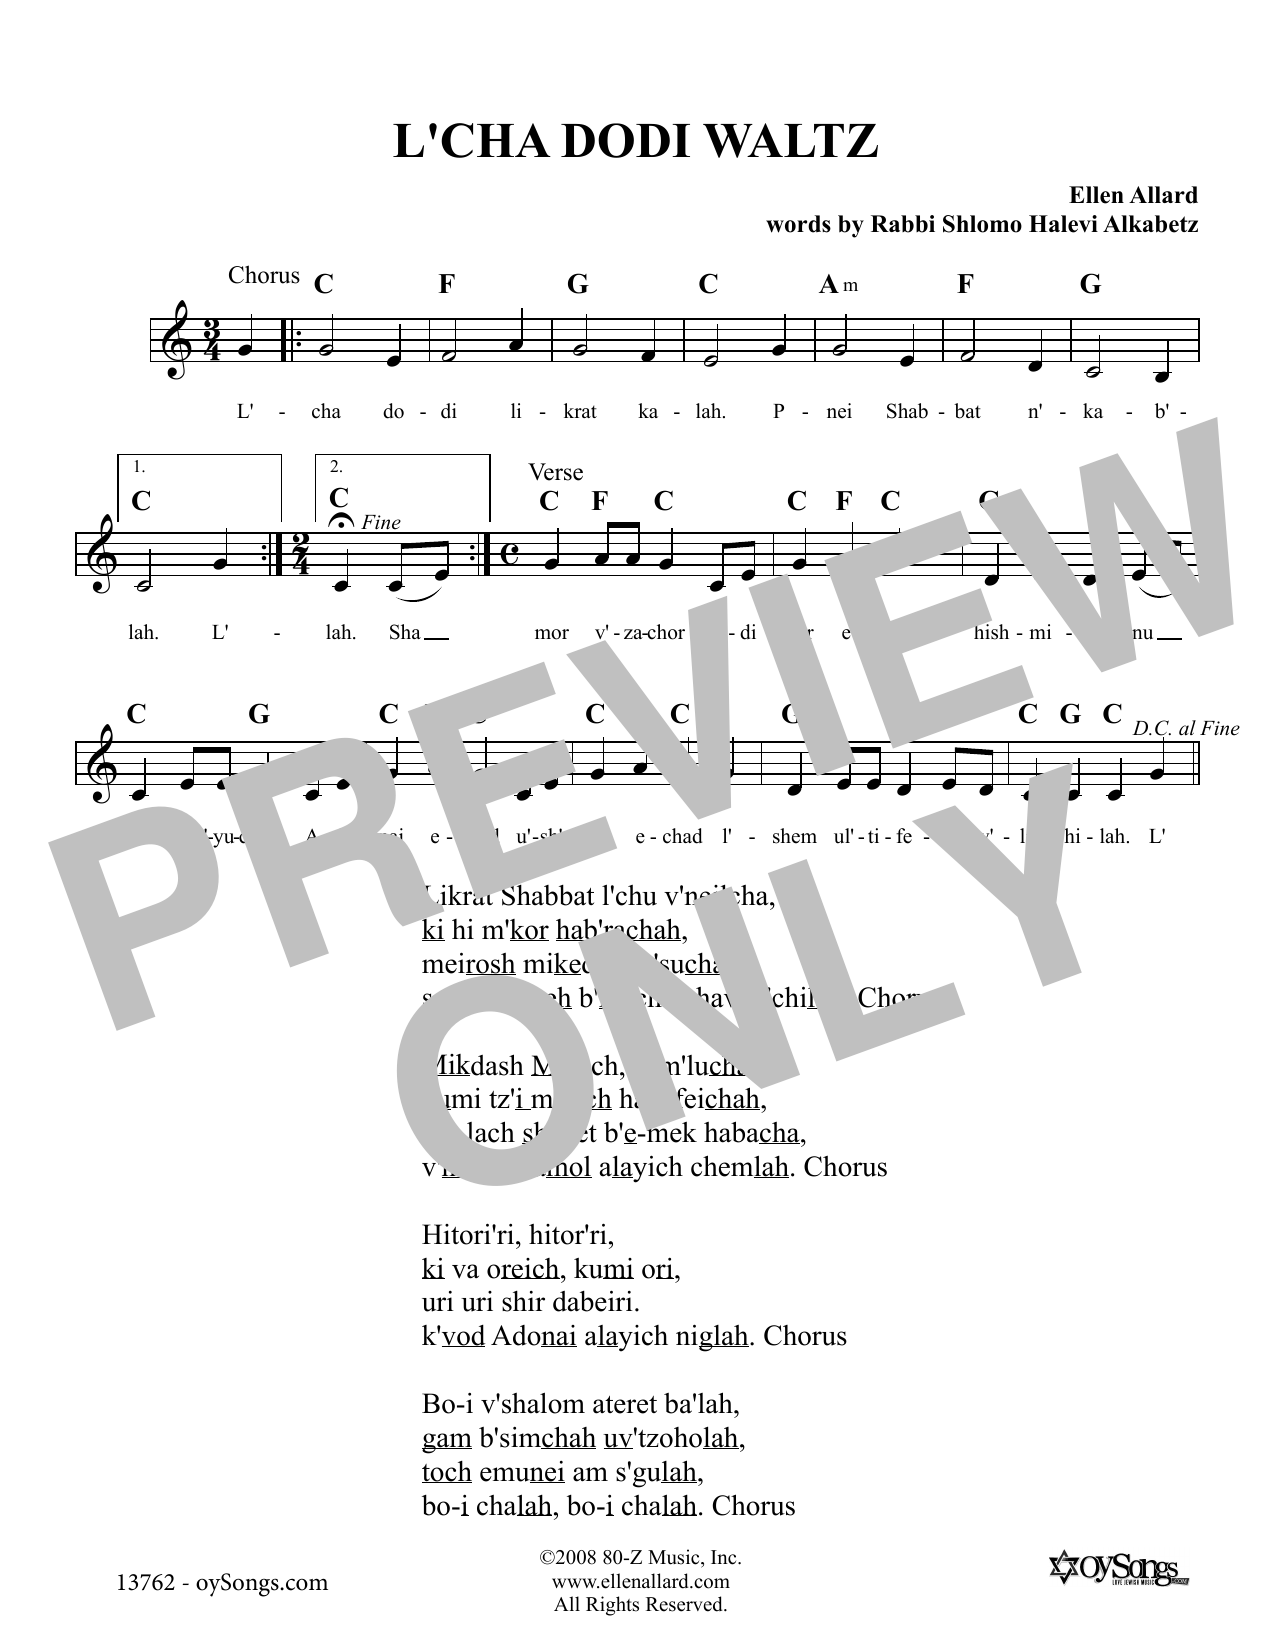 Ellen Allard L'cha Dodi Waltz sheet music notes and chords arranged for Lead Sheet / Fake Book